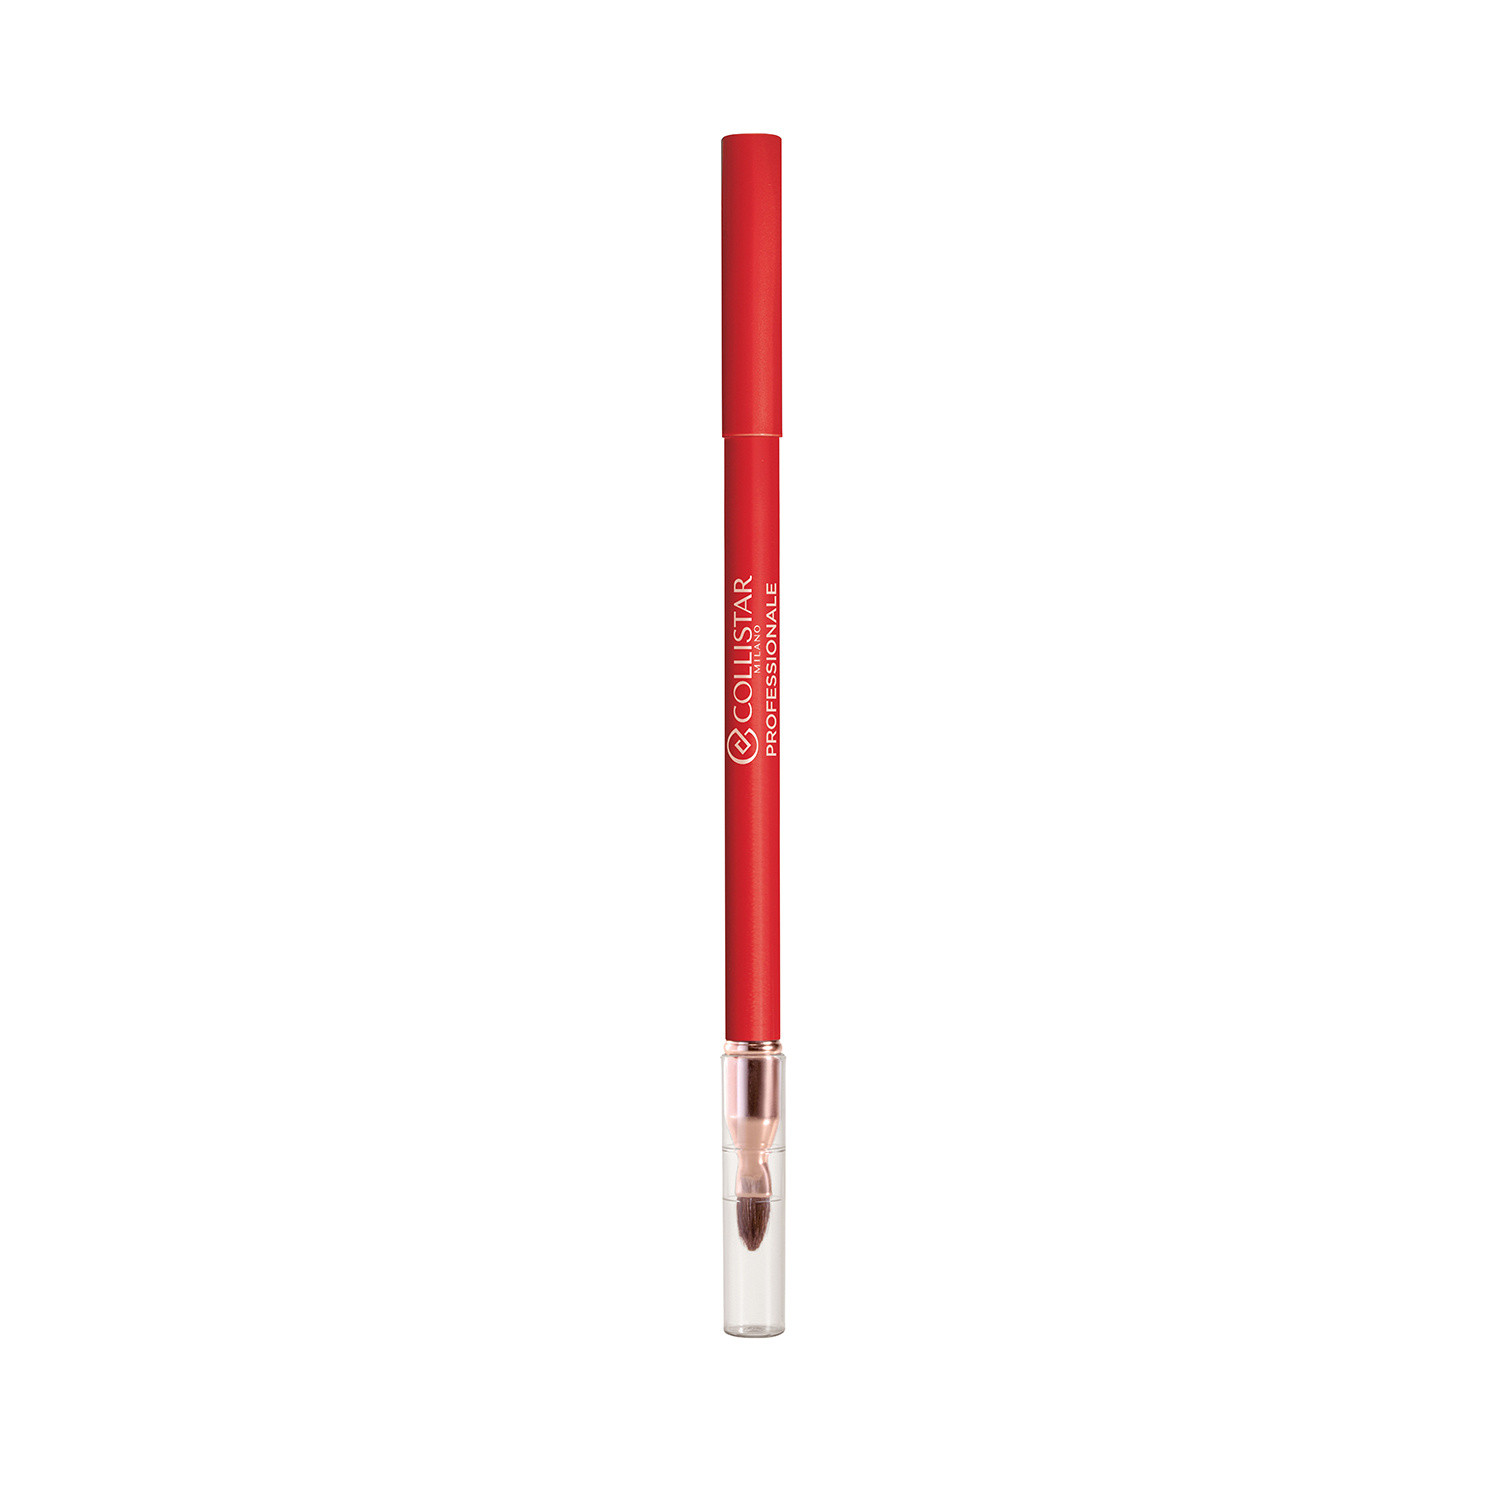 Collistar - Professionale matita labbra lunga durata  7 Rosso Ciliegia, Rosso ciliegia, large image number 0